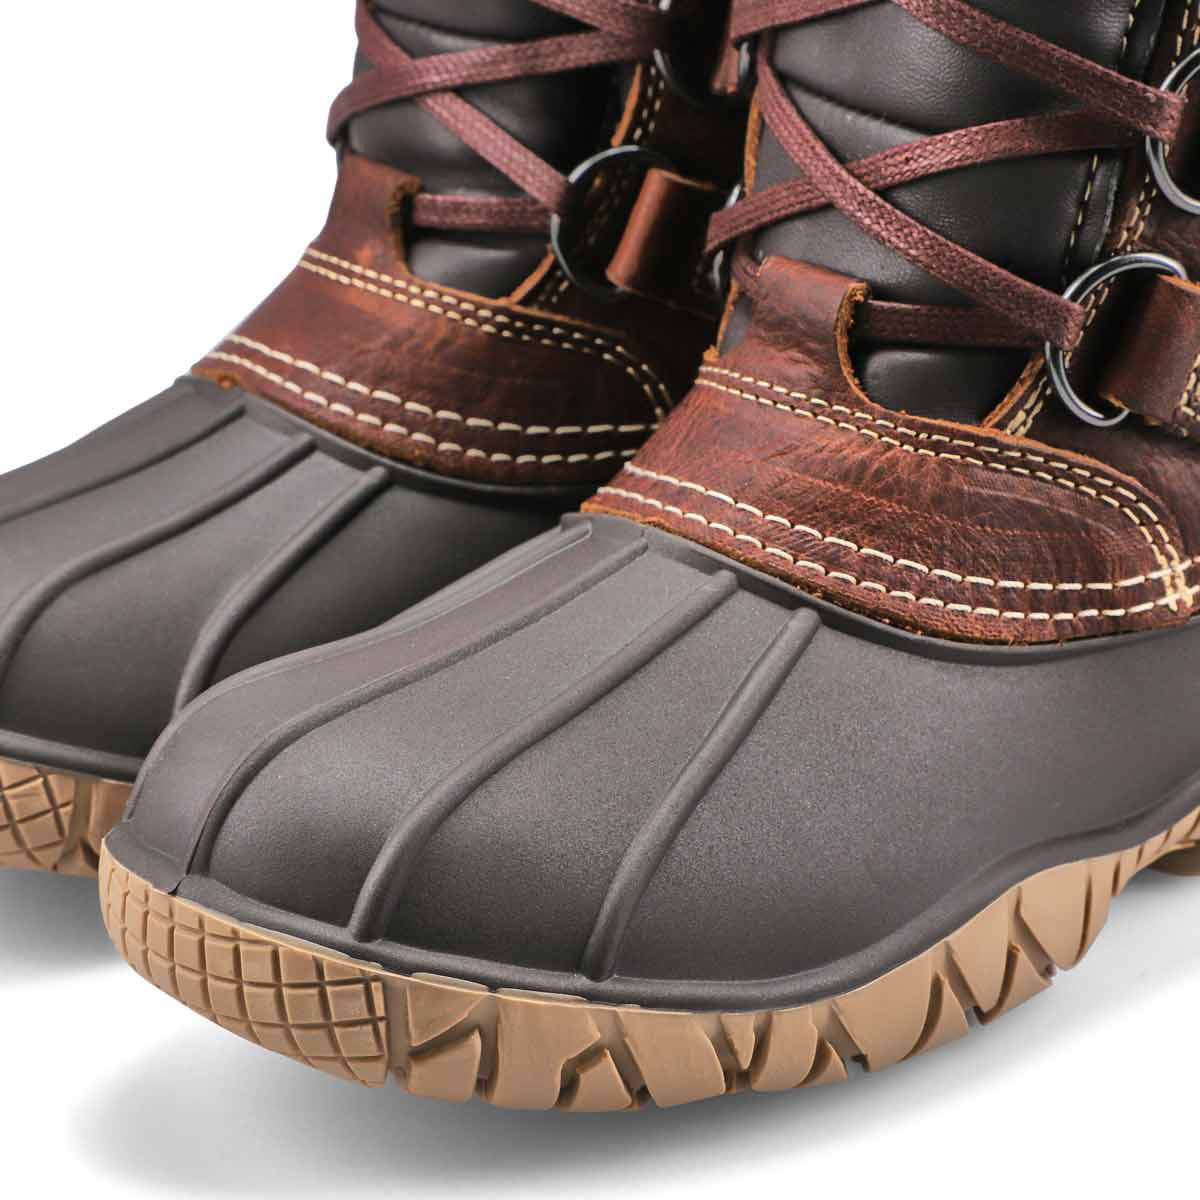 Women's Yellowknife Waterproof Winter Boot - Brown